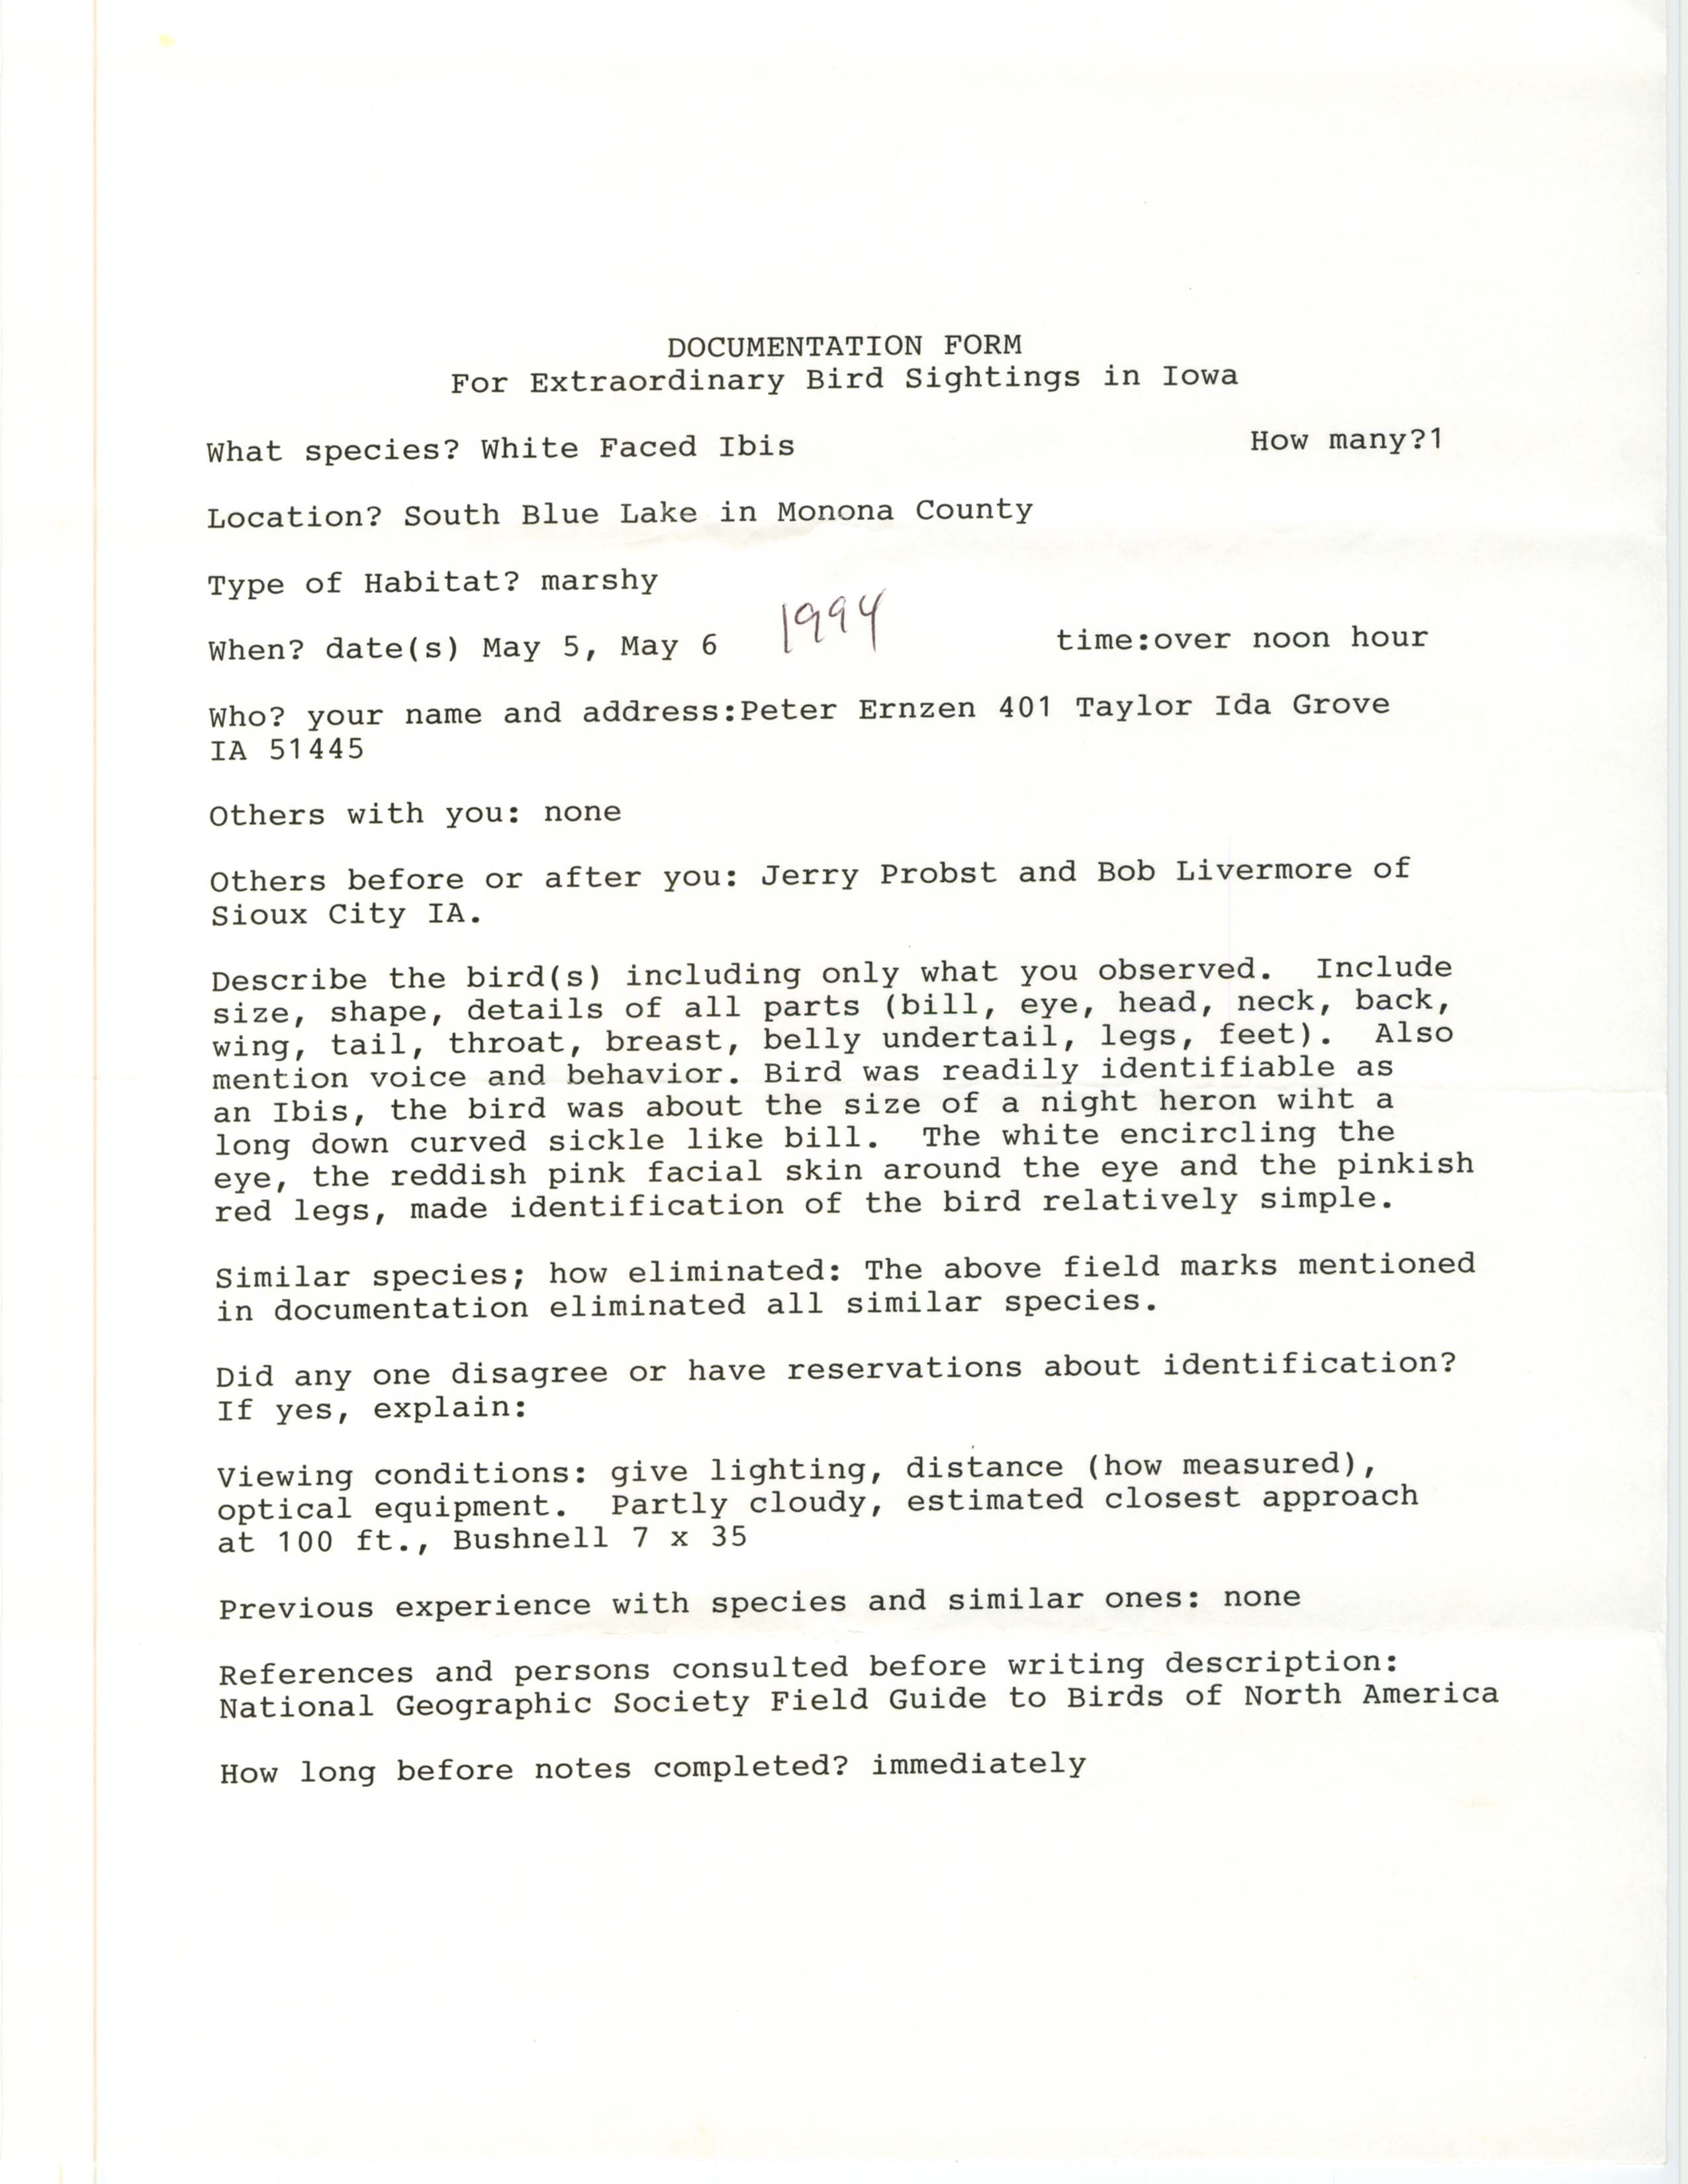 Documentation form for extraordinary bird sightings in Iowa regarding a White-faced Ibis, 1994